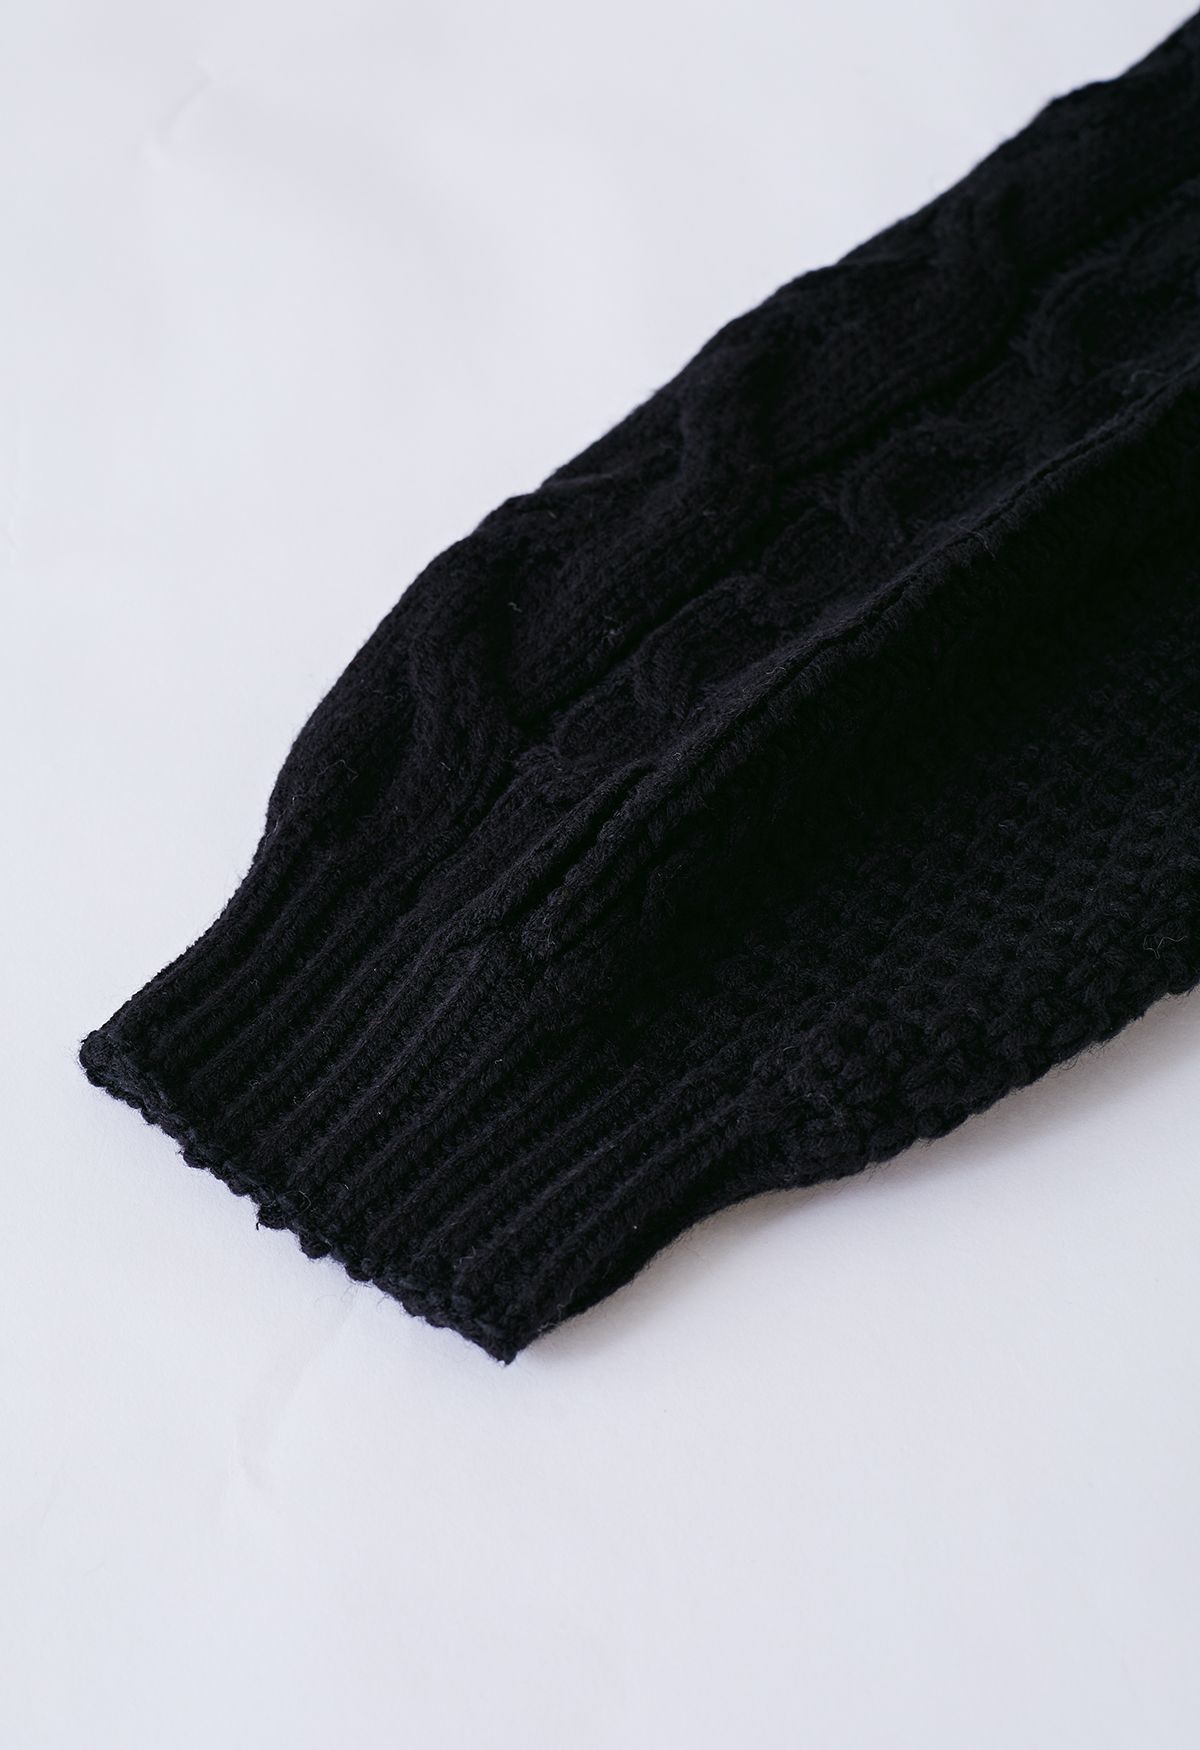 Turtleneck Tassel Trim Cable Knit Sweater in Black